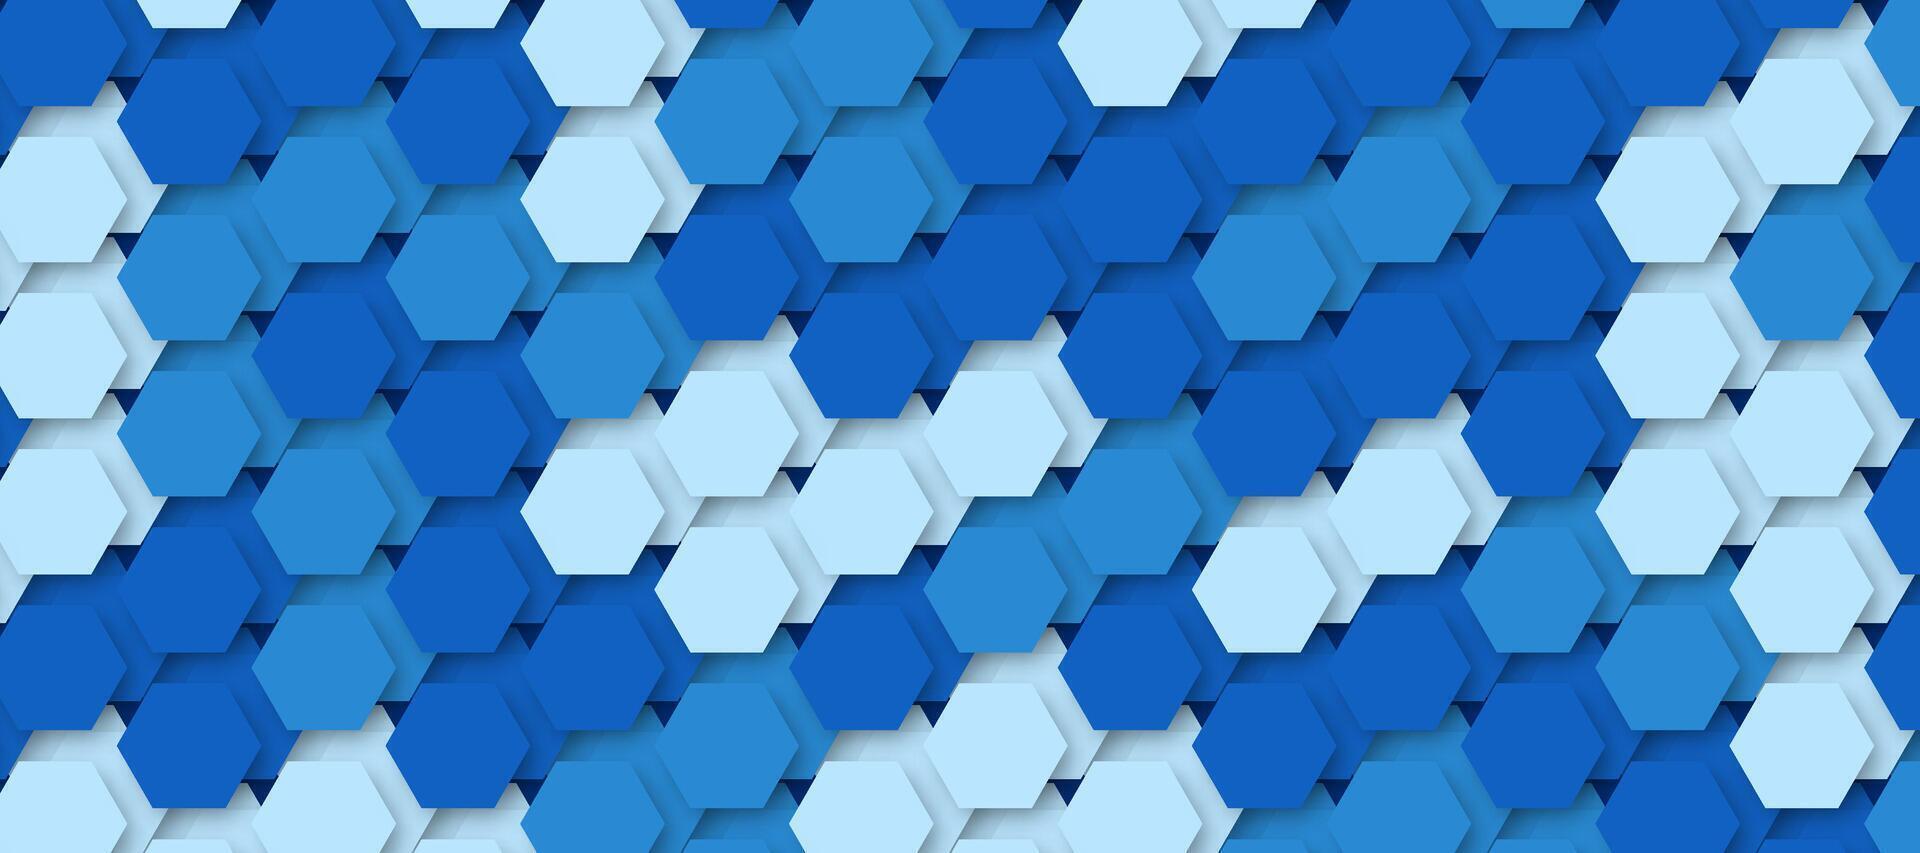 blå hexagonal abstrakt tredimensionell bakgrund vektor